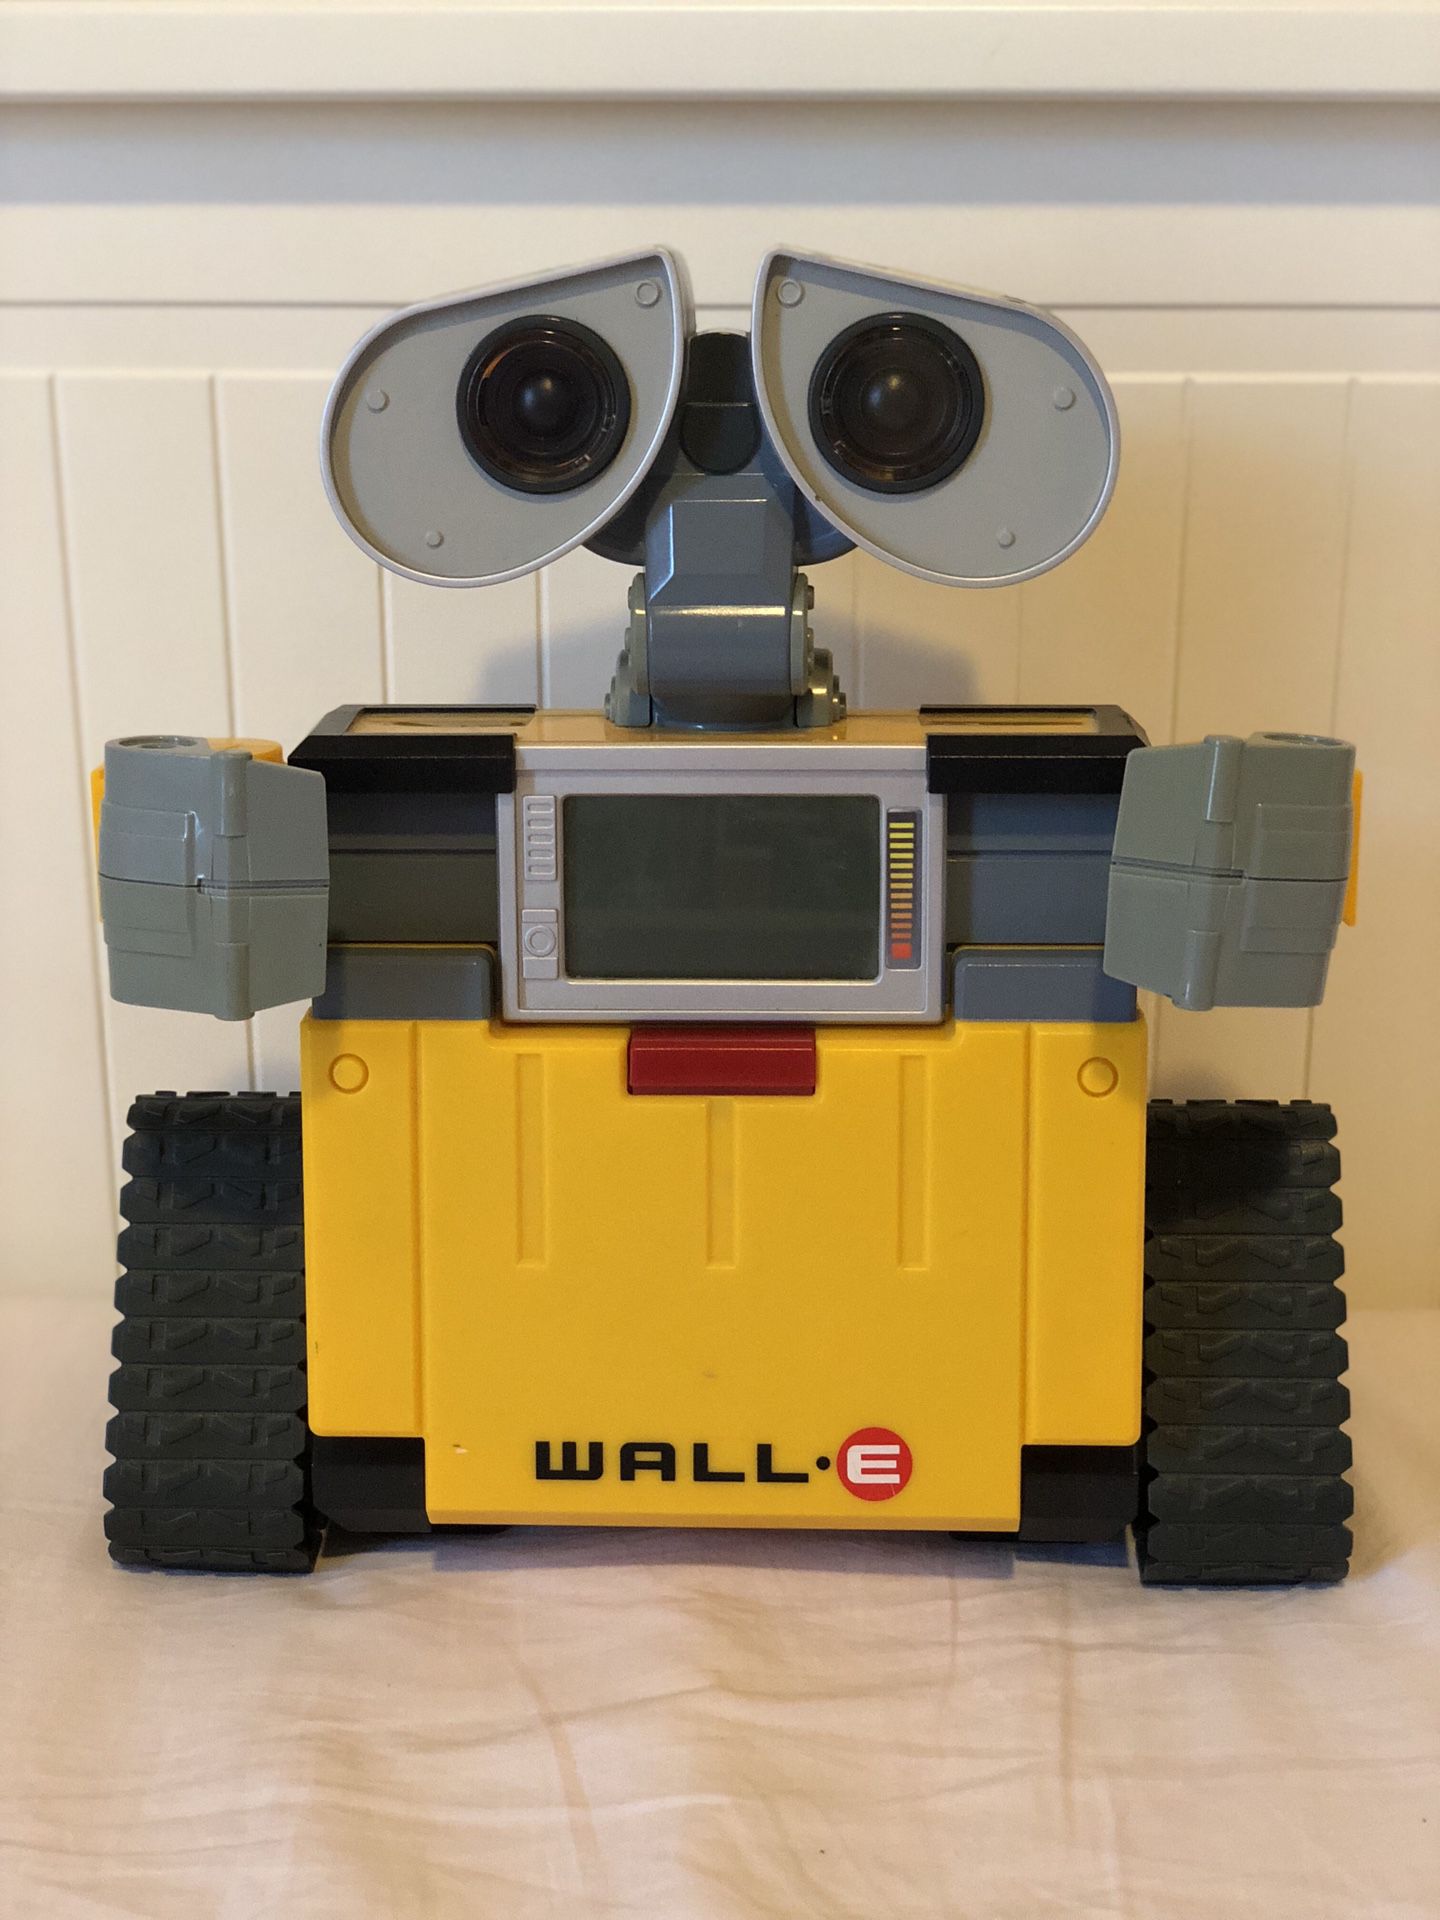 Wall-E Vtech Learning Laptop Computer Robot Disney/Pixar - Catawiki